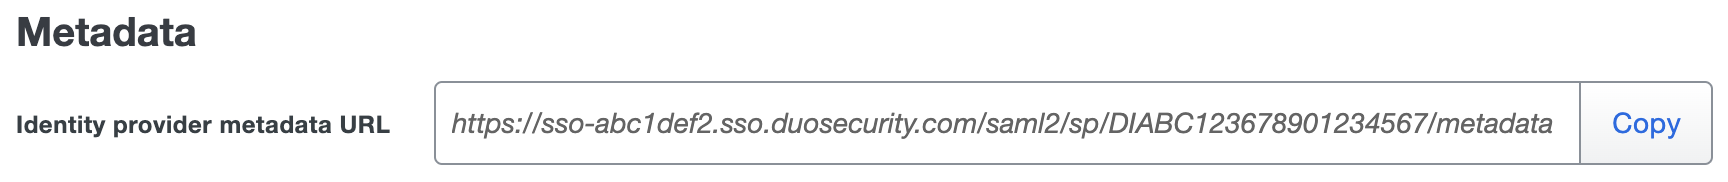 Duo Bitdefender Identity Provider Metadata URL